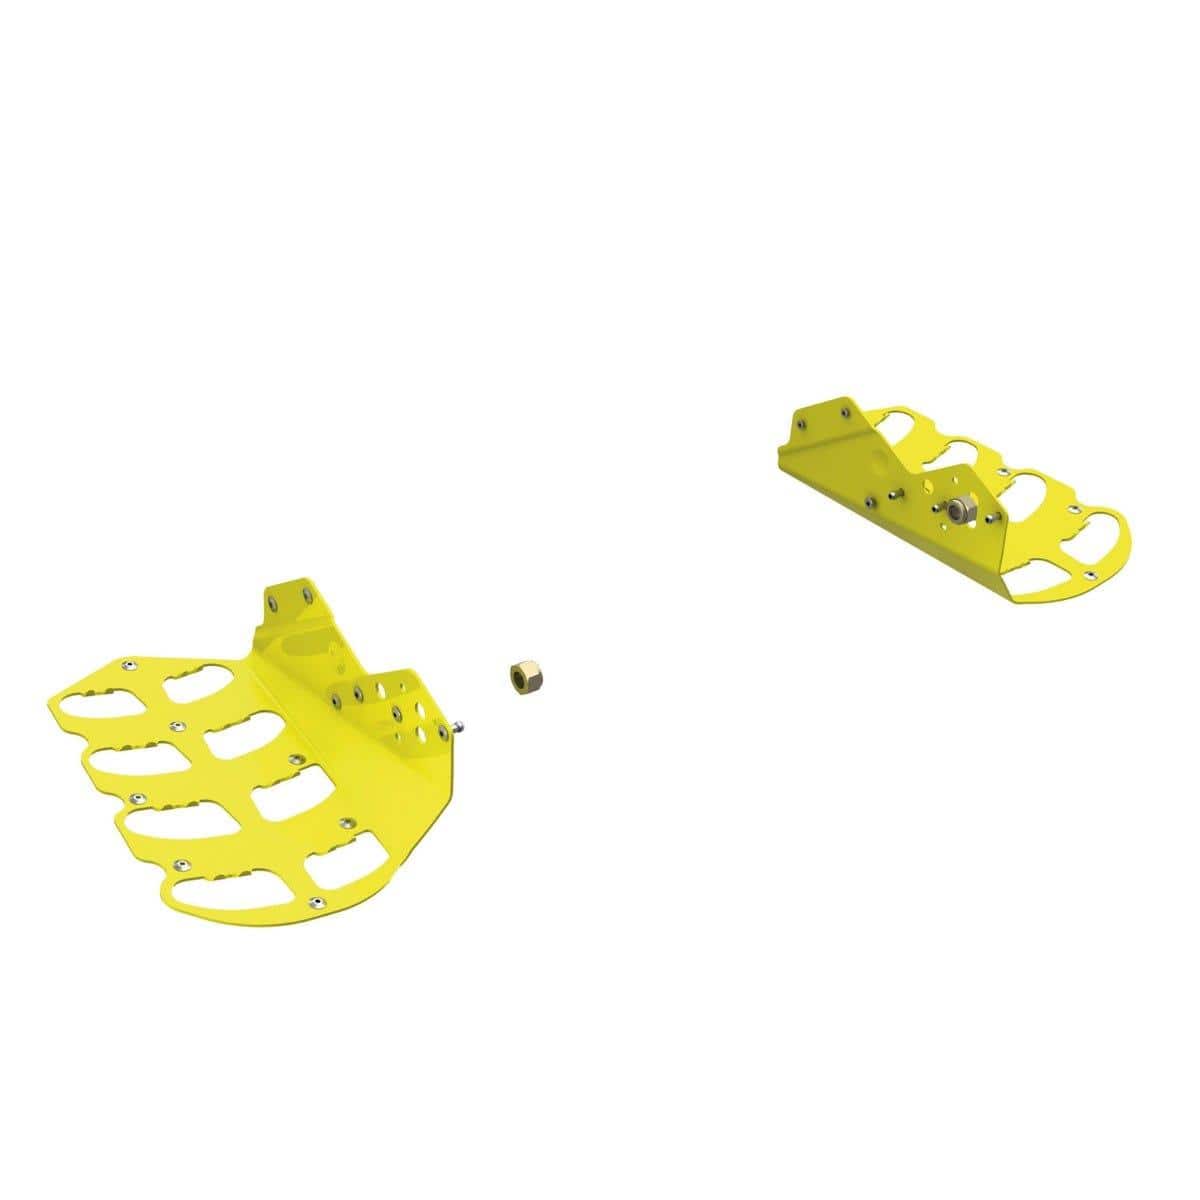 Chassis Reinforcement Kit / Sunburst Yellow - Factory Recreation